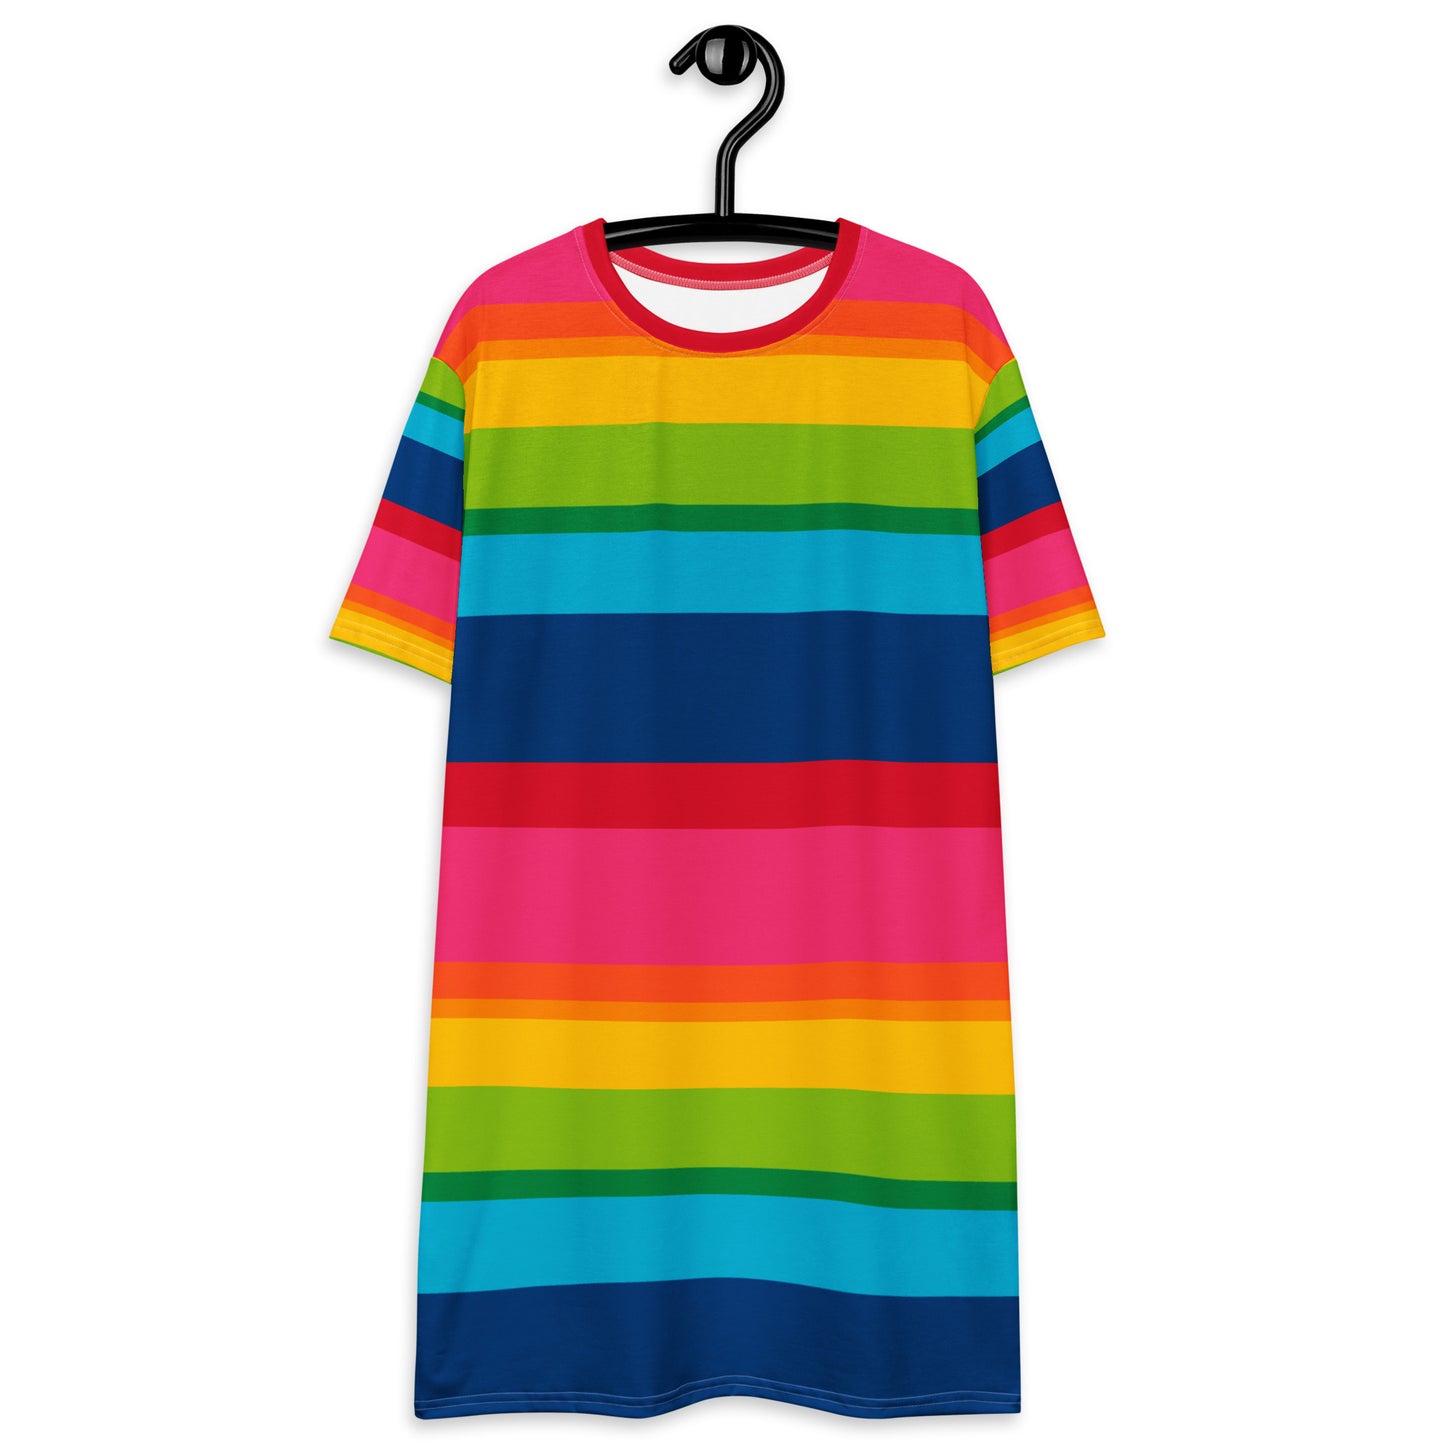 ELLIE rainbow stripe - T-shirt dress